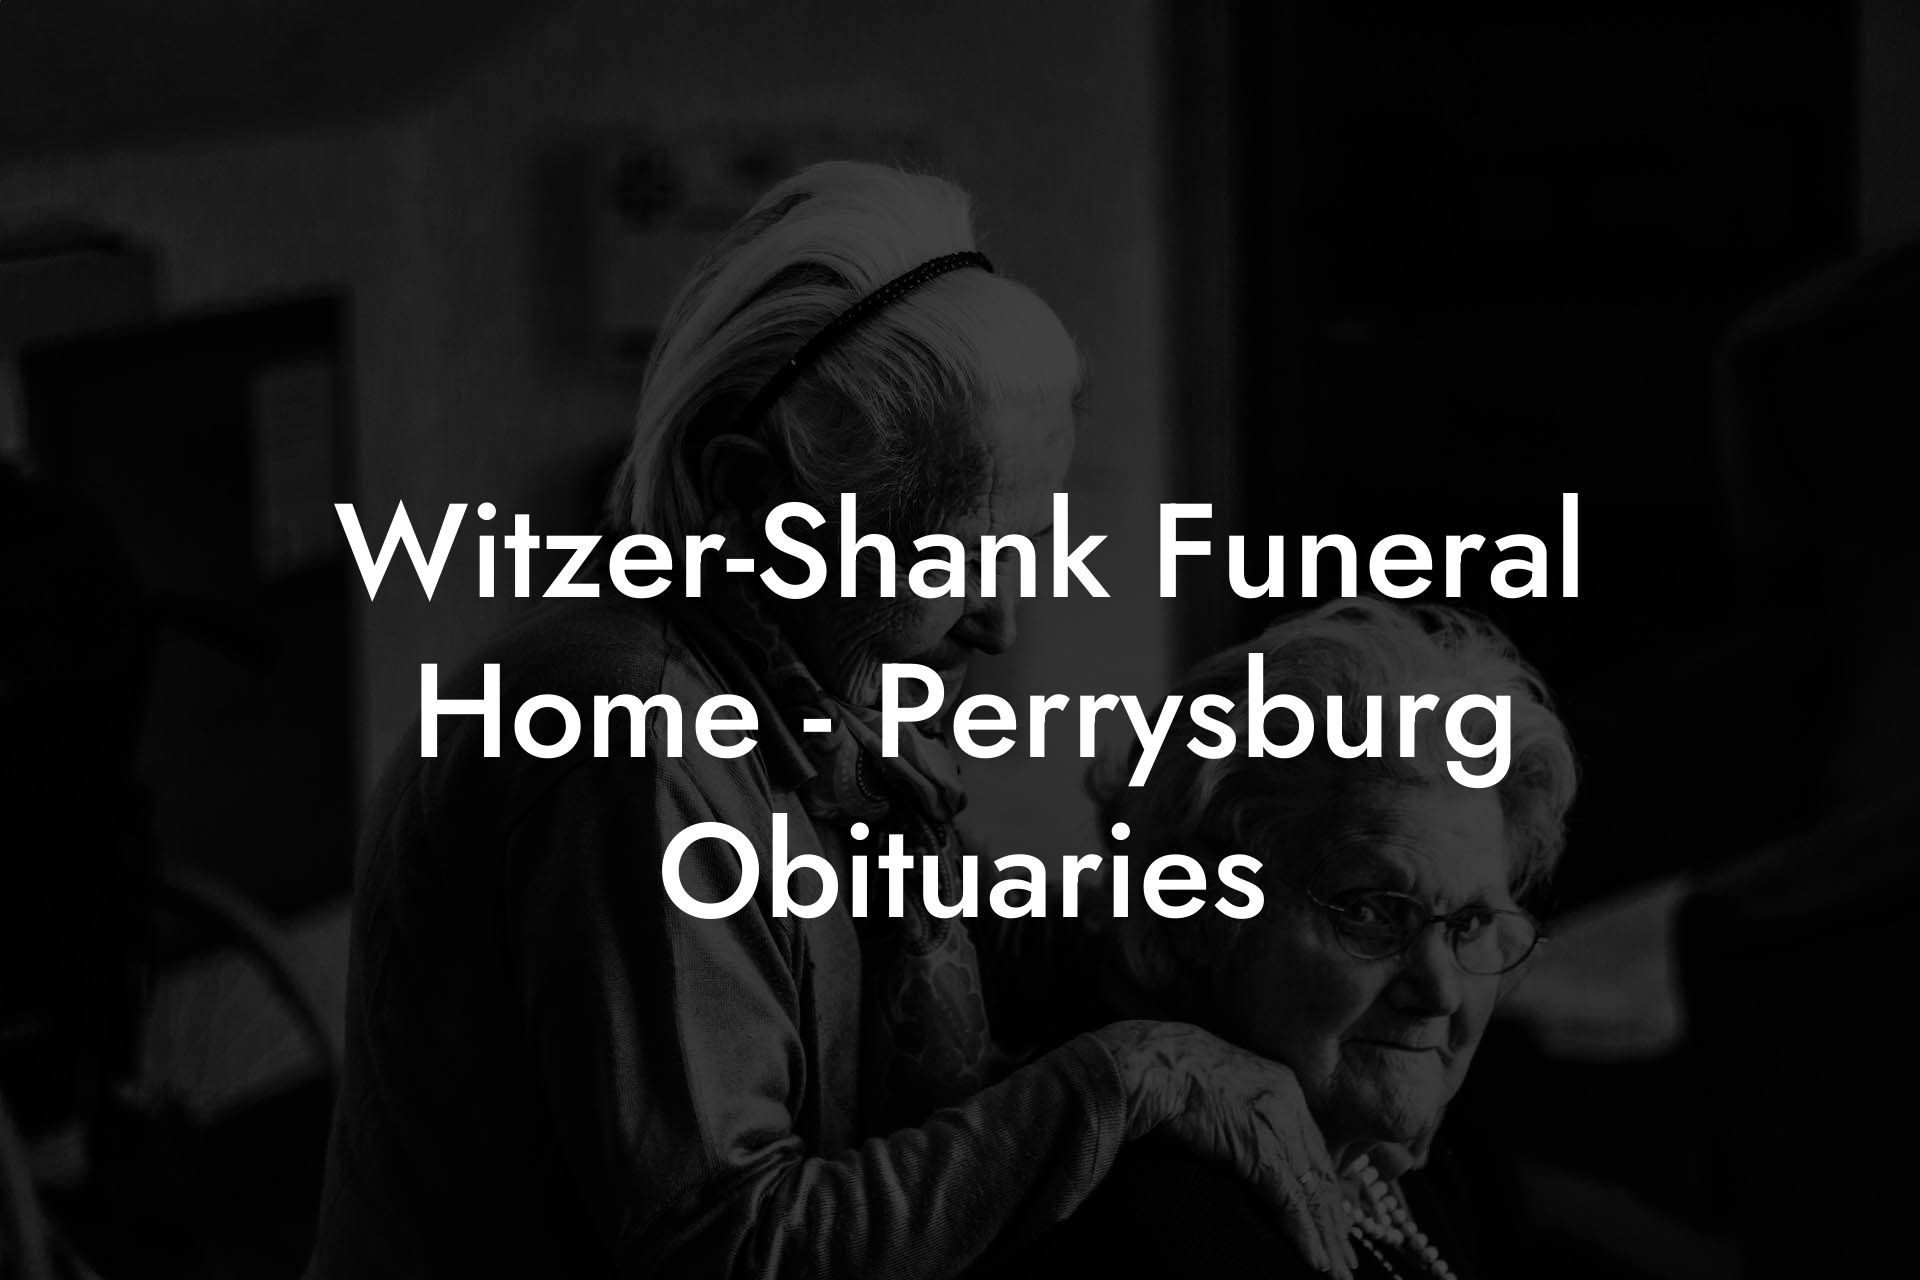 Witzer-Shank Funeral Home - Perrysburg Obituaries